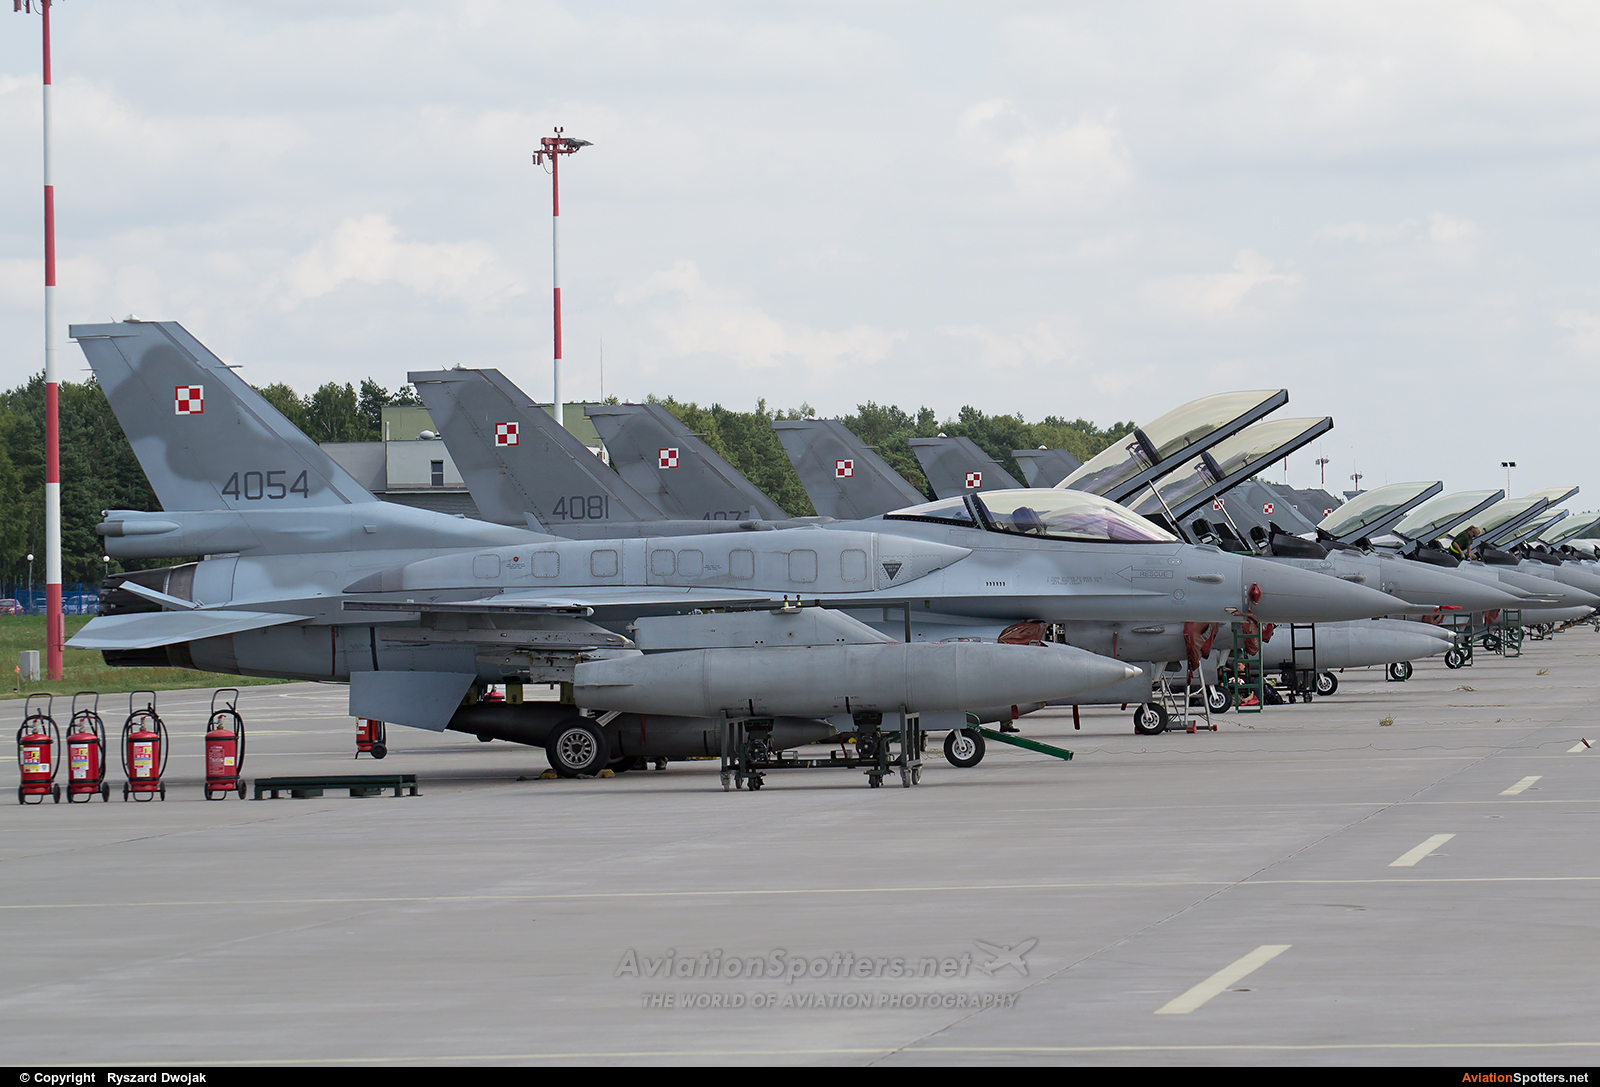 Poland - Air Force  -  F-16C Block 52+ Fighting Falcon  (4054) By Ryszard Dwojak (ryś)